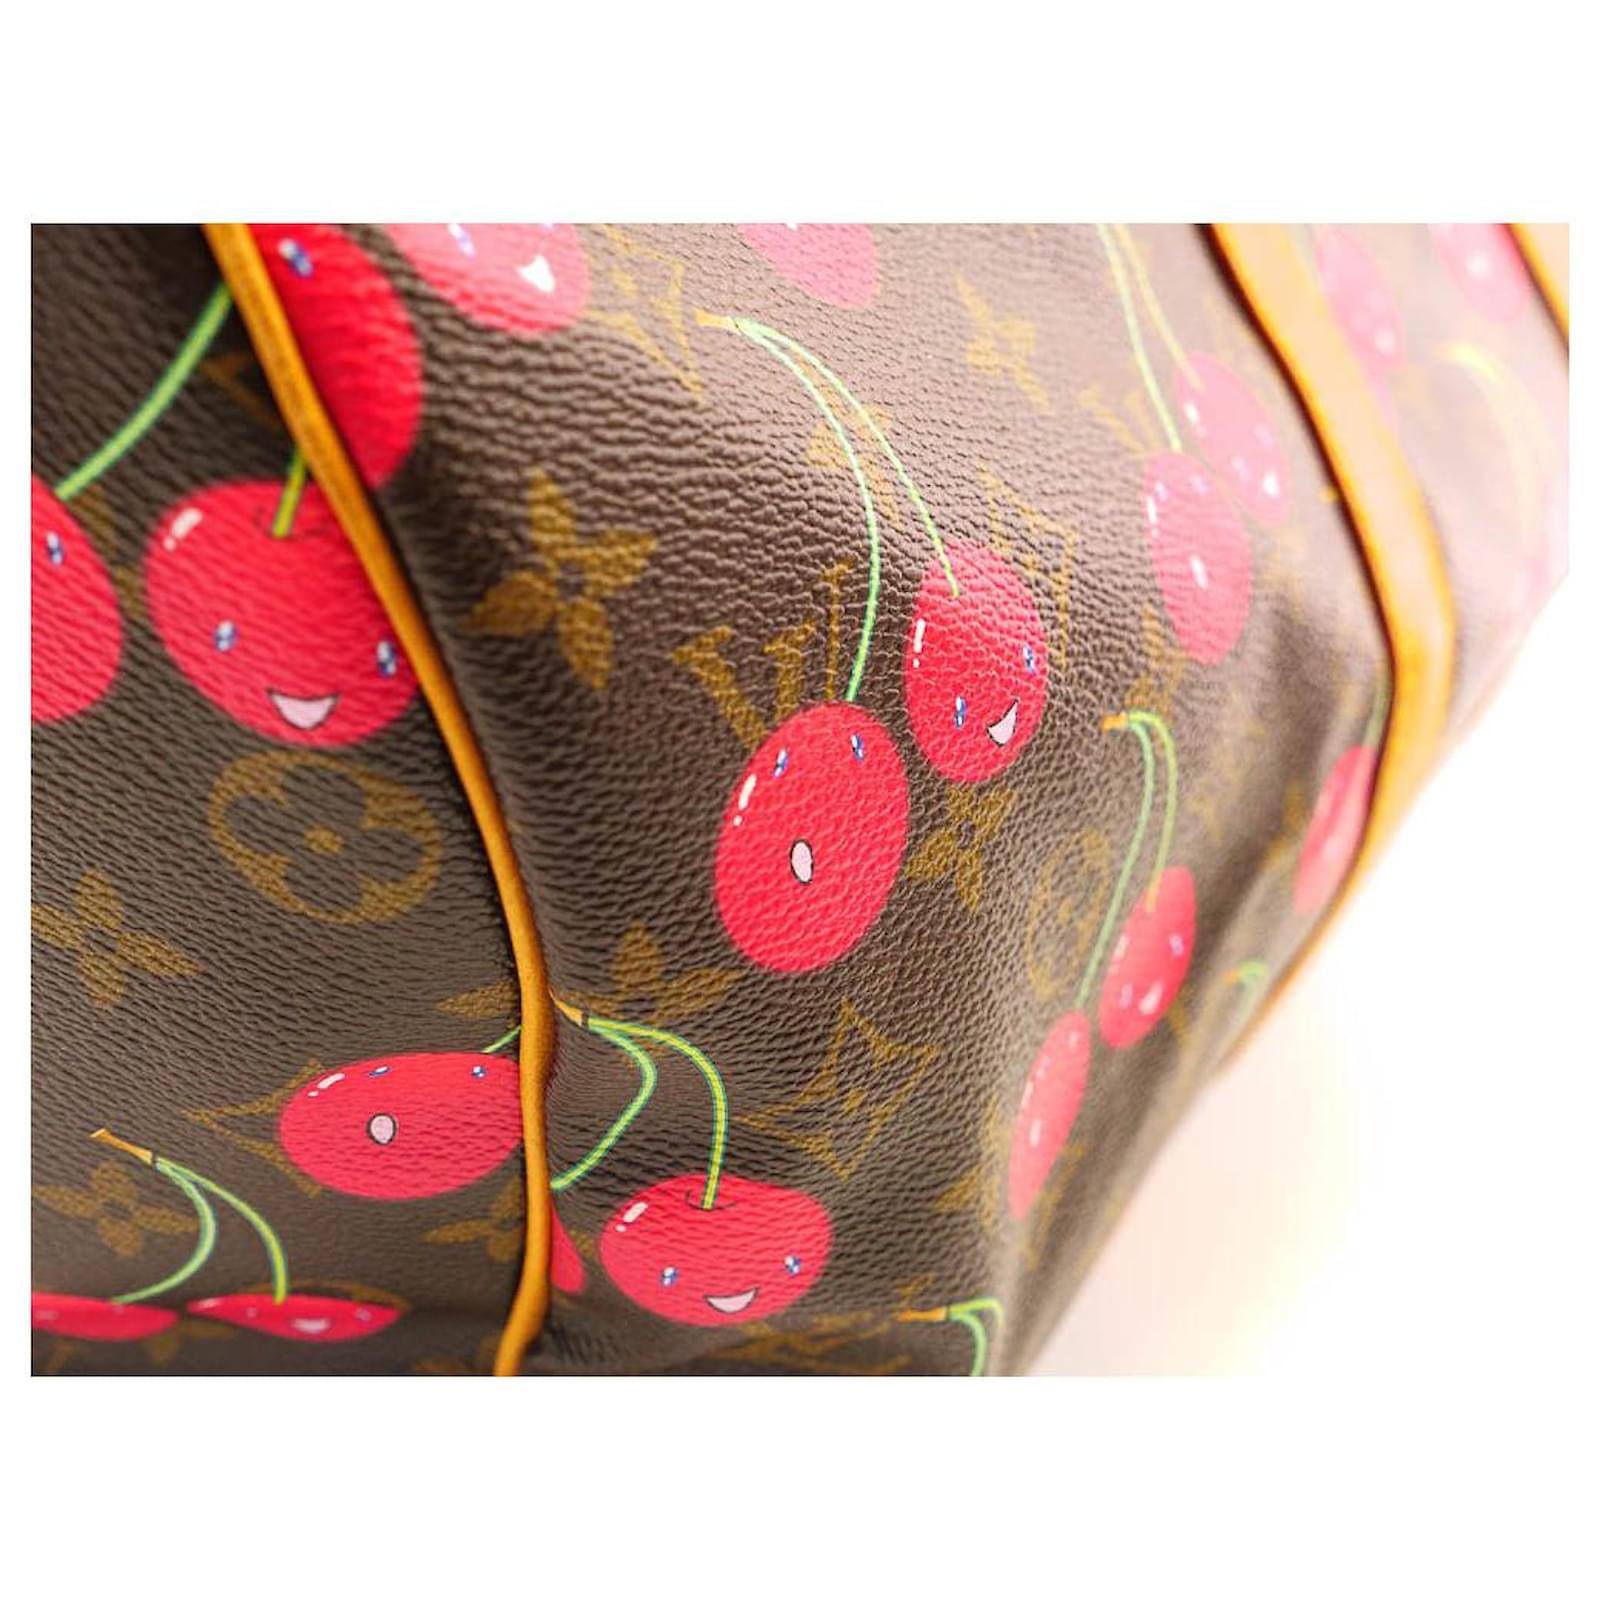 Louis Vuitton Keepall 45 Takashi Murakami Cerises Cherry Monogram Travel Bag